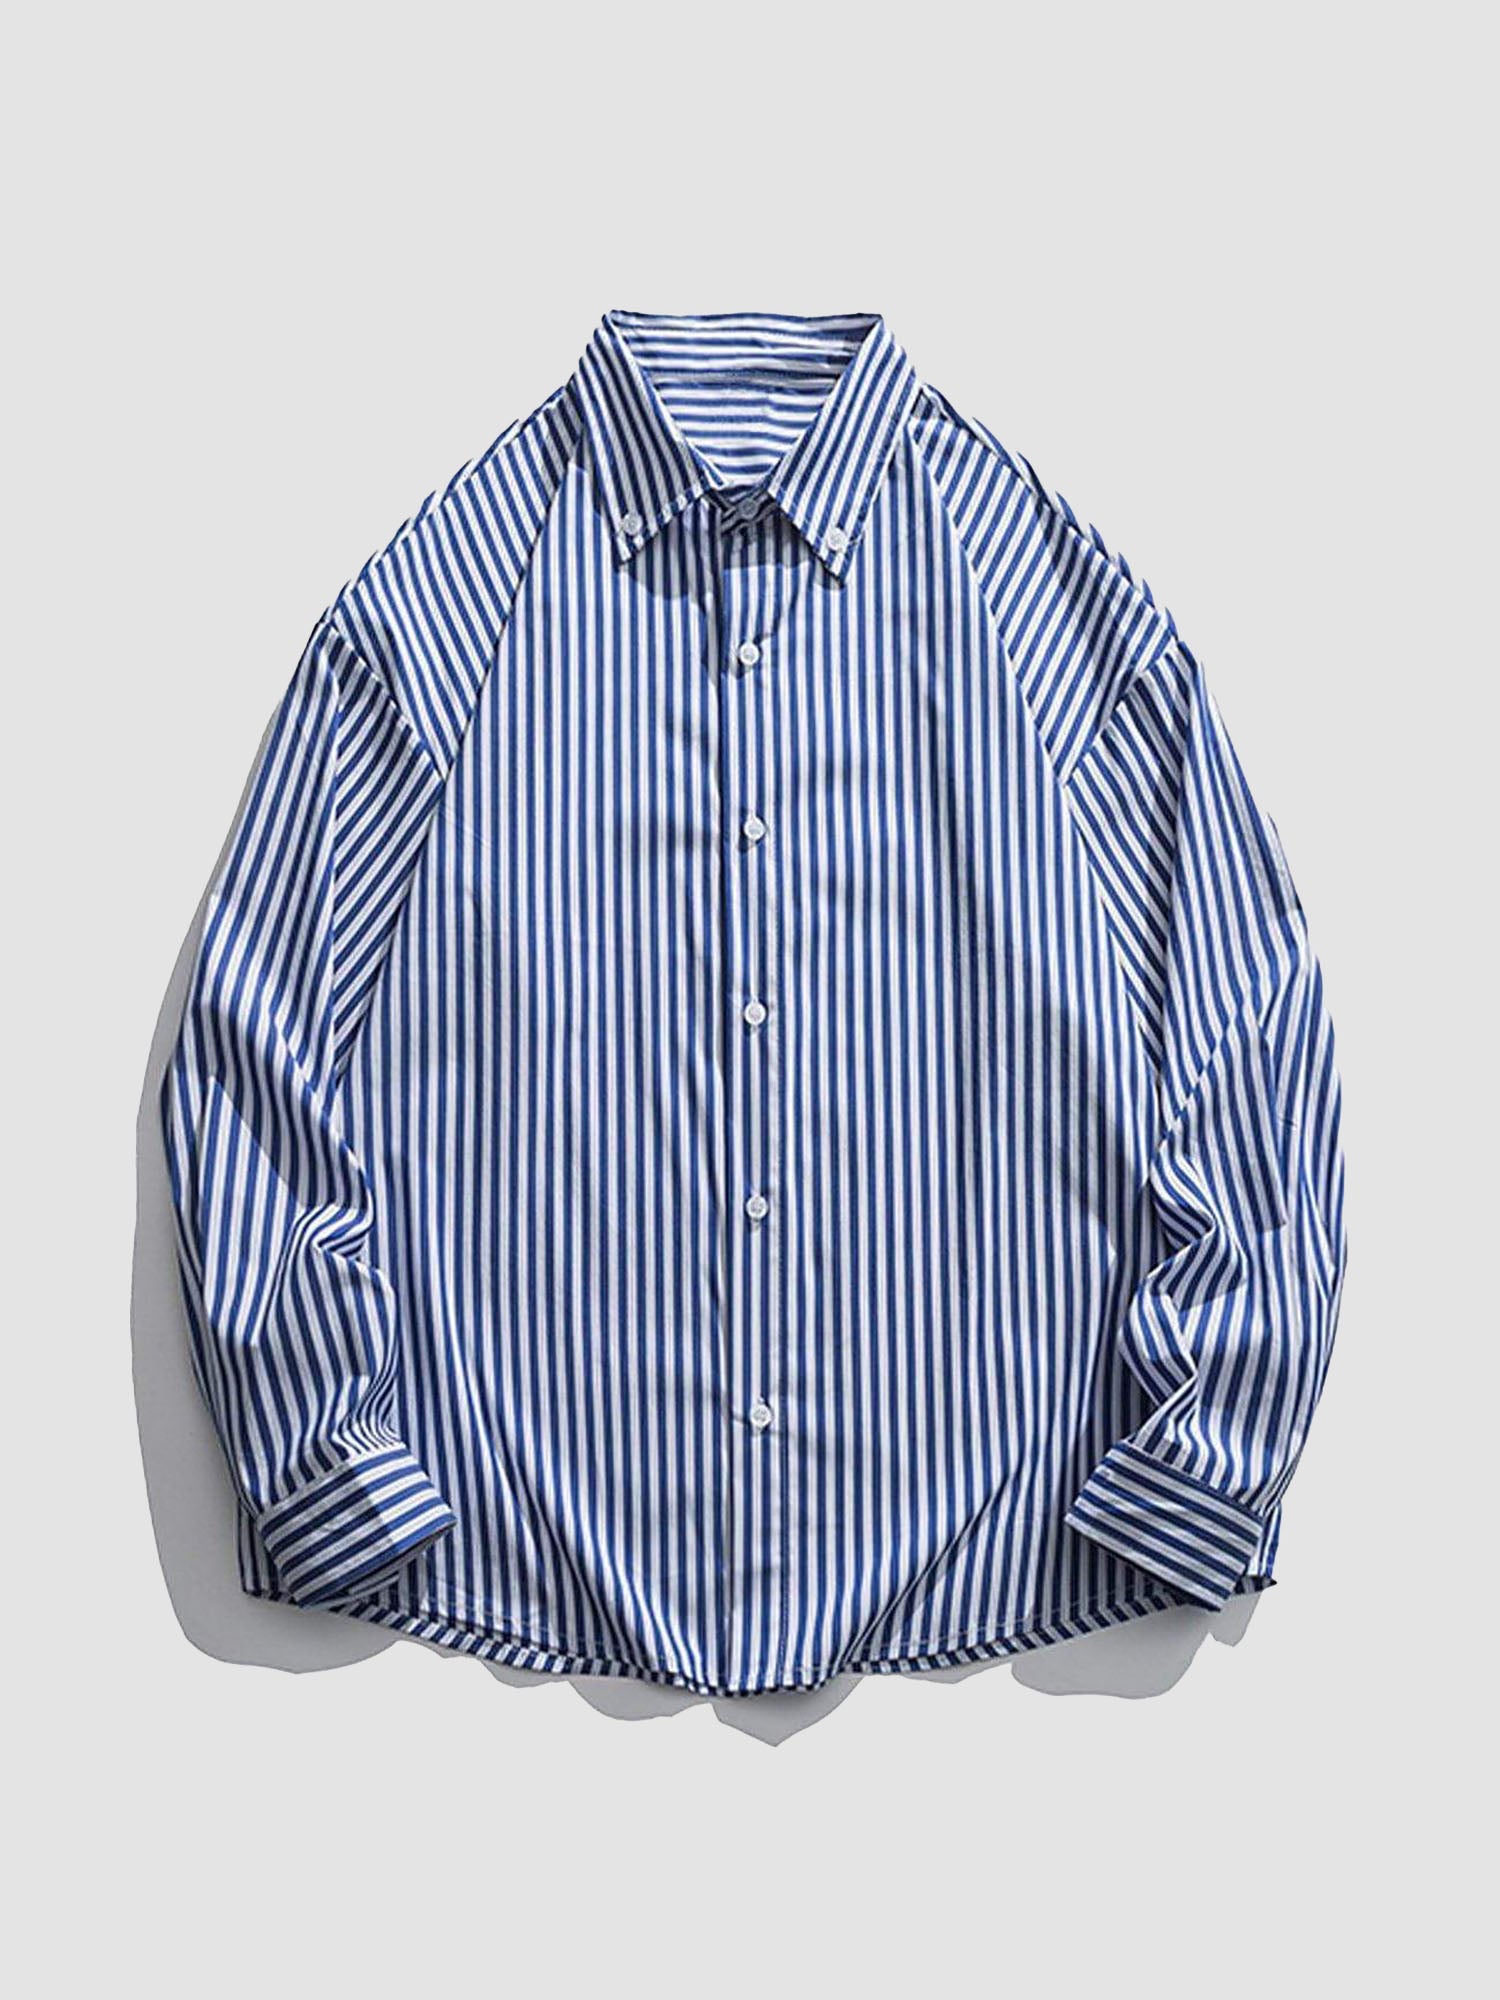 JUSTNOTAG Vintage Vertical Striped Long-sleeved Shirt